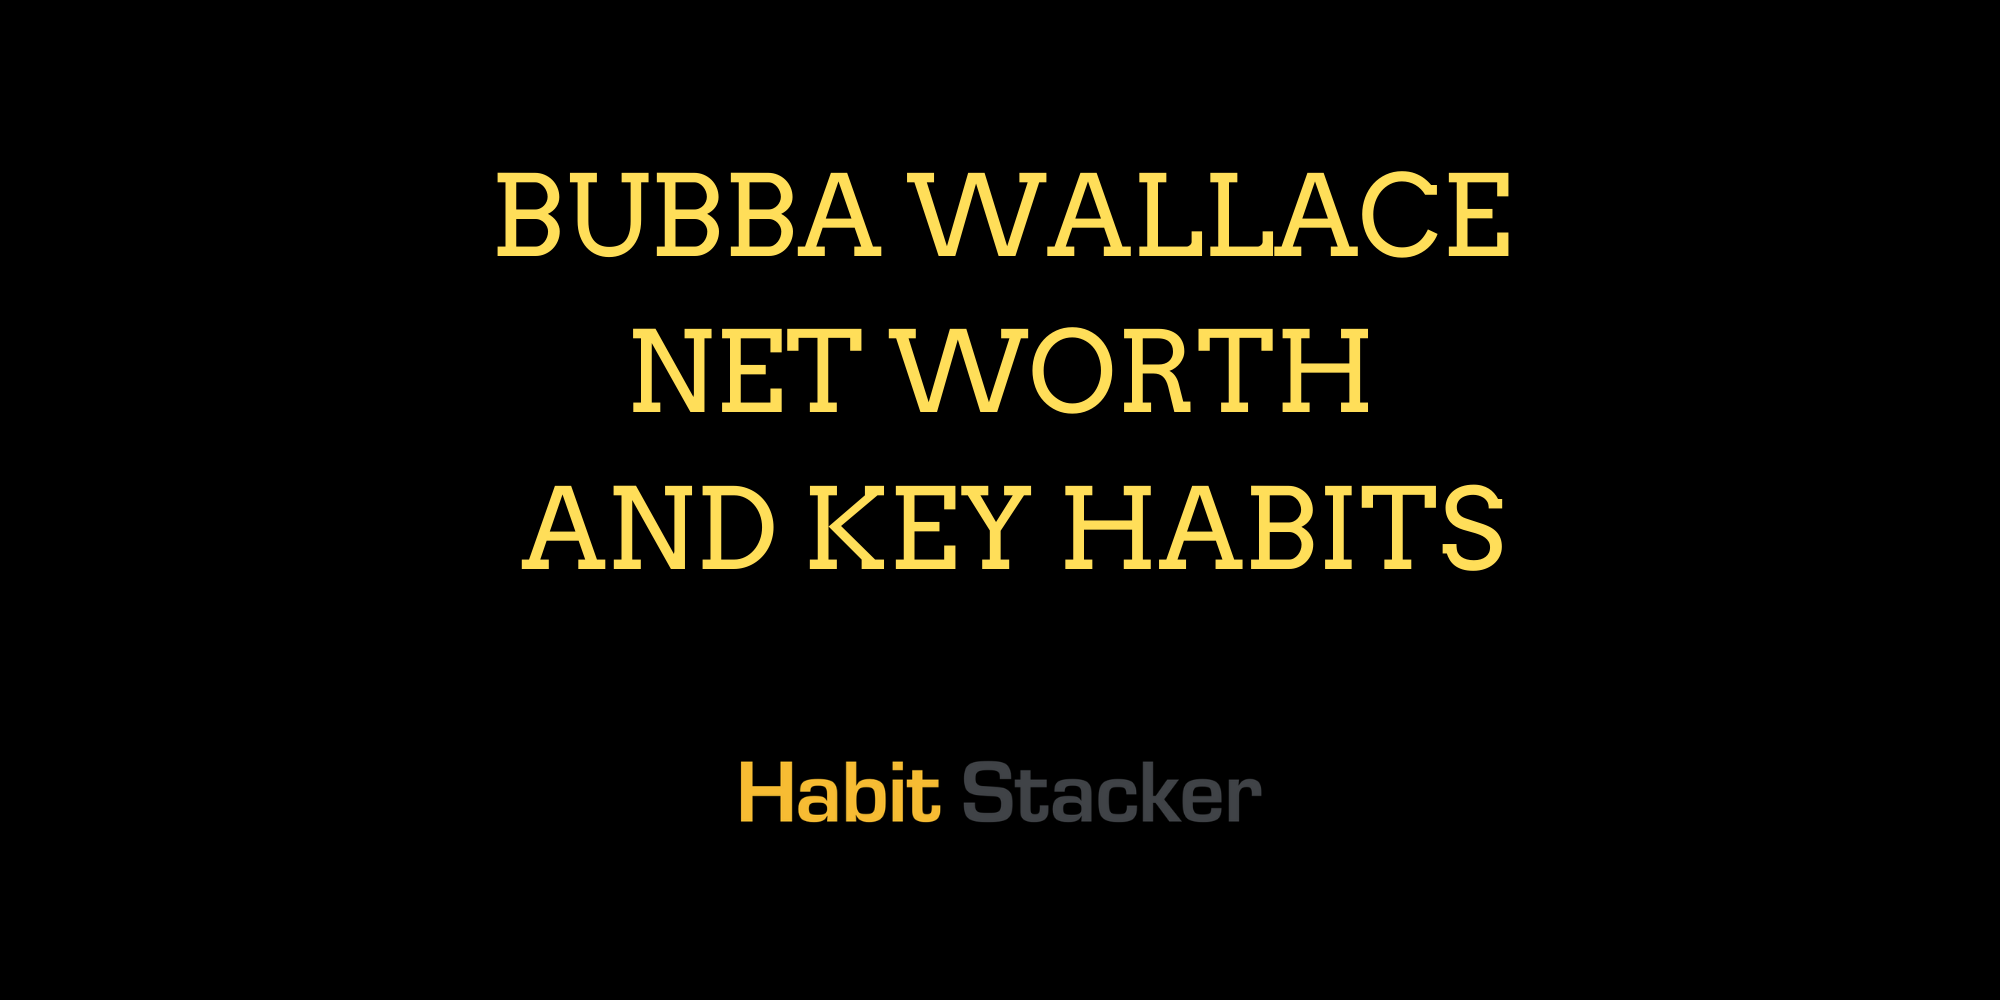 Bubba Wallace Net Worth And Key Habits